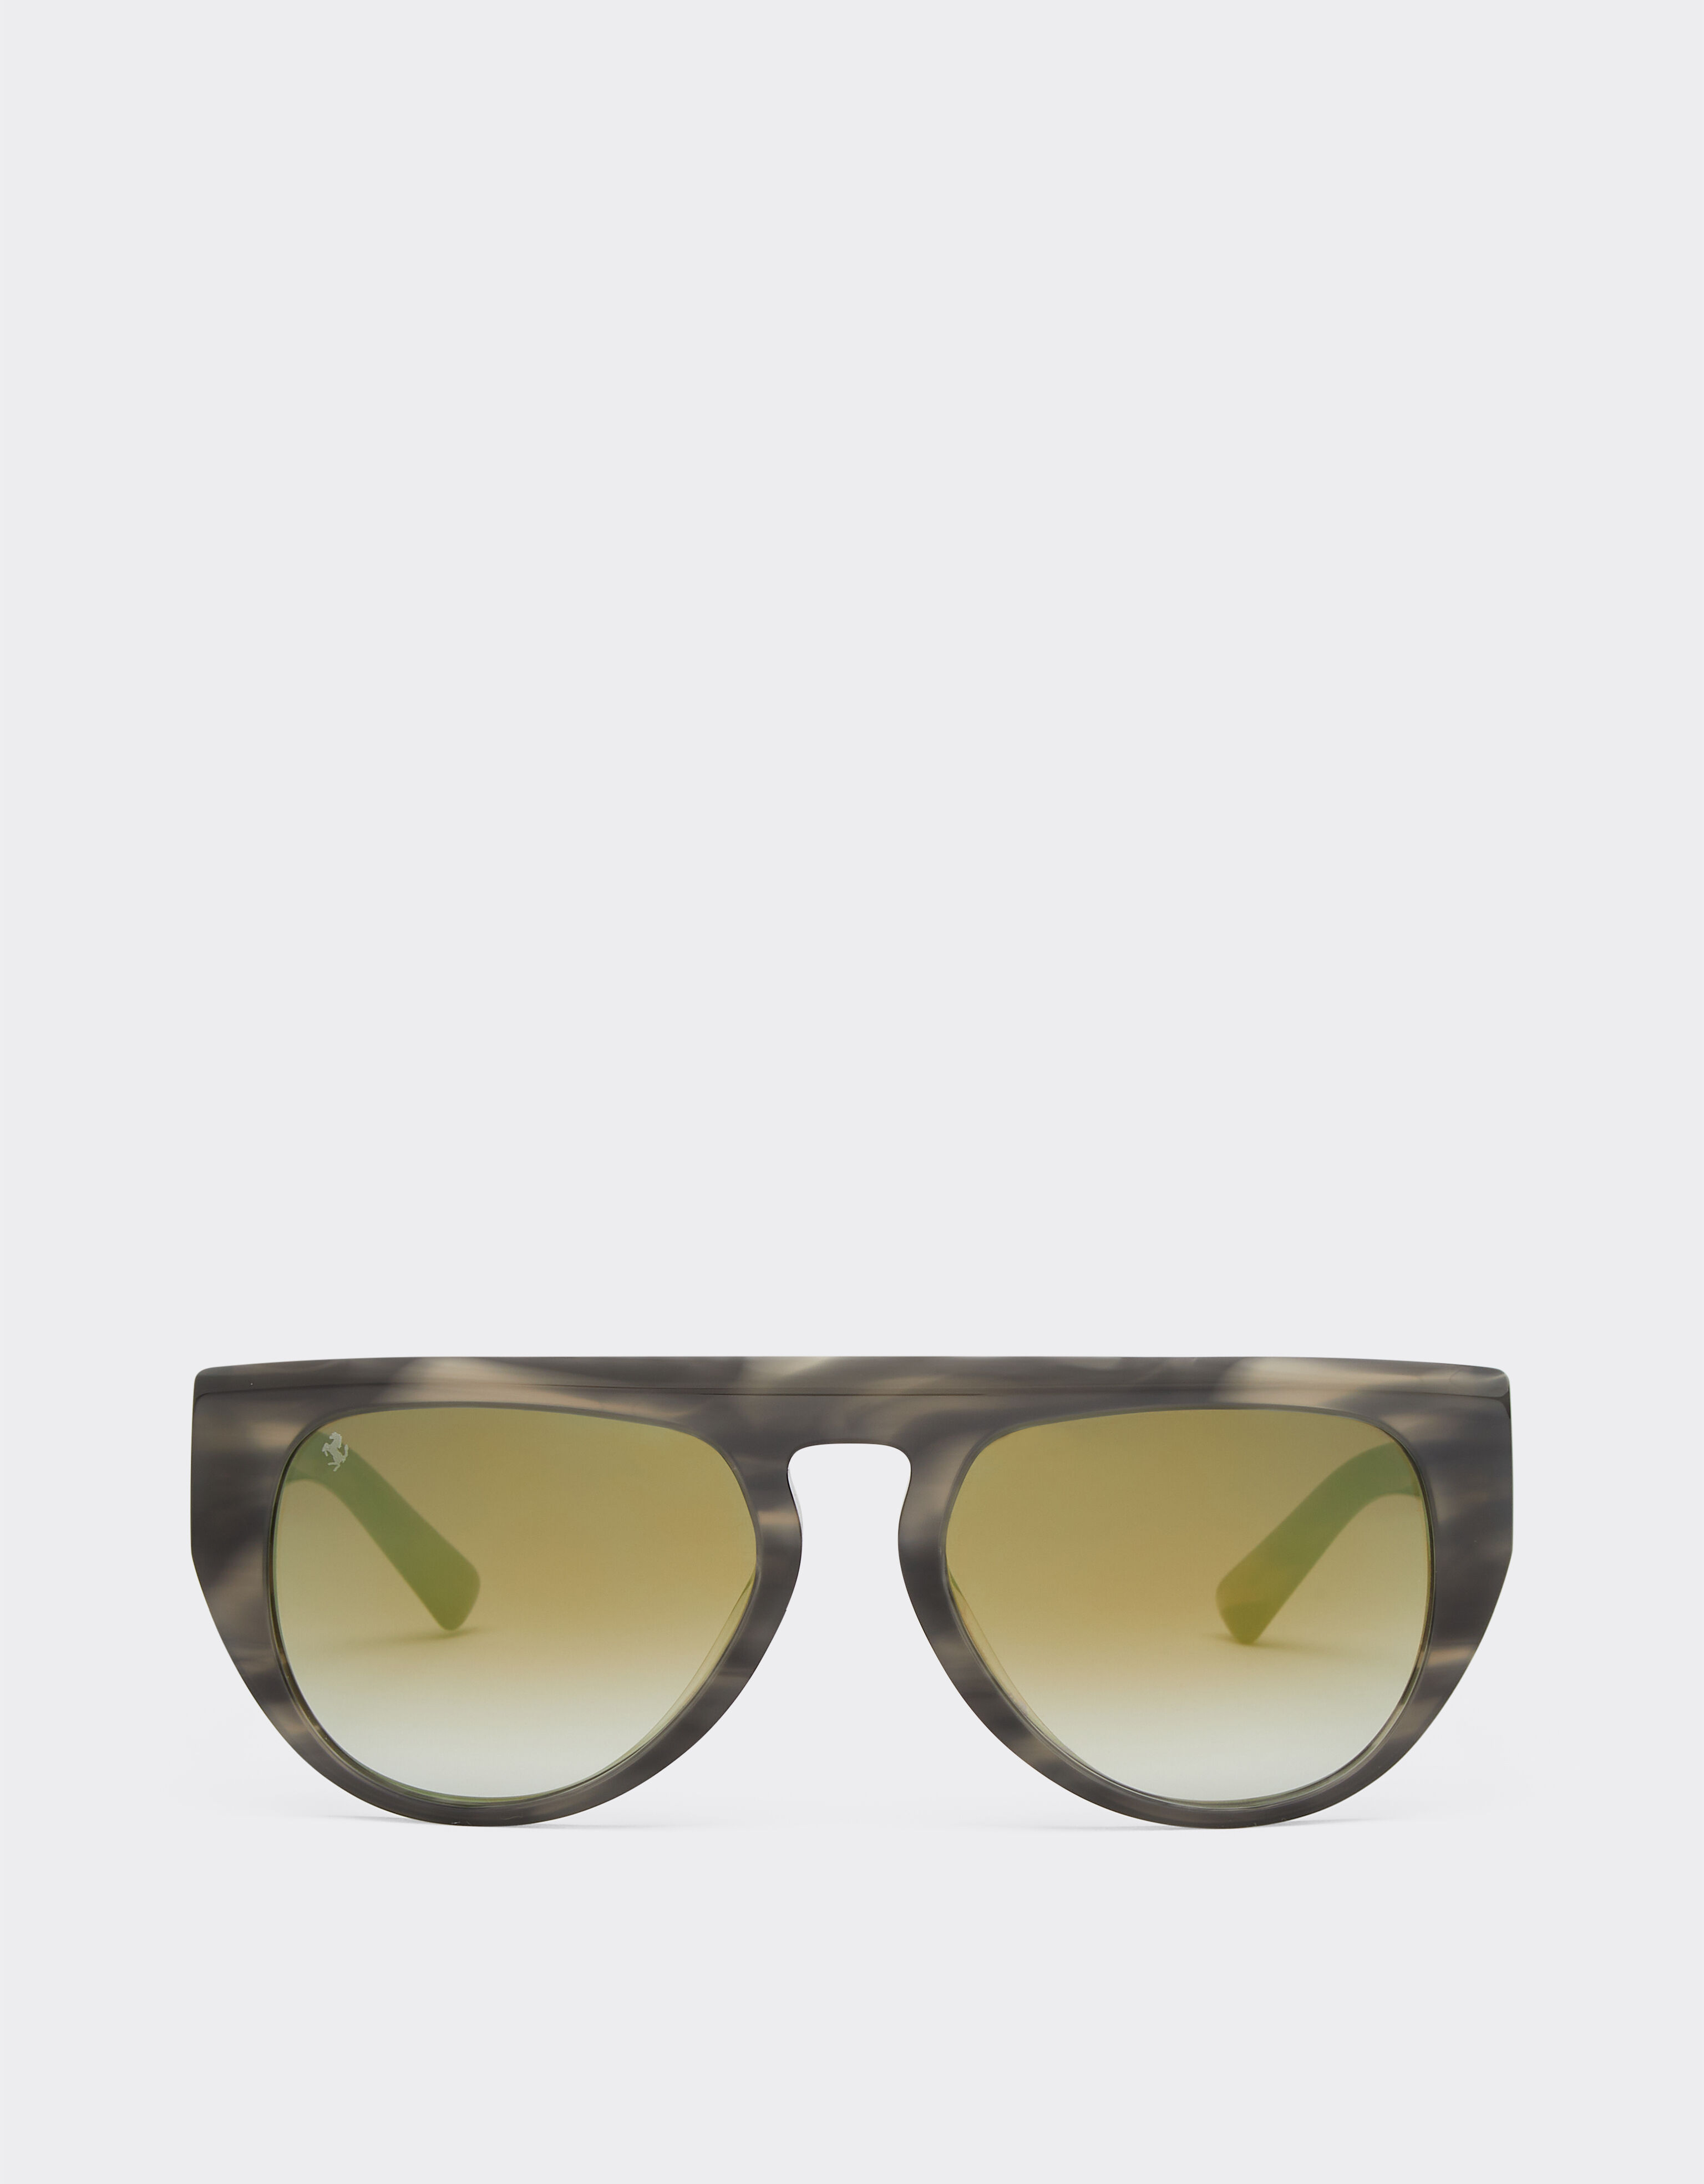 Ferrari Ferrari sunglasses in grey striped acetate with mirror lenses Black Matt F1257f